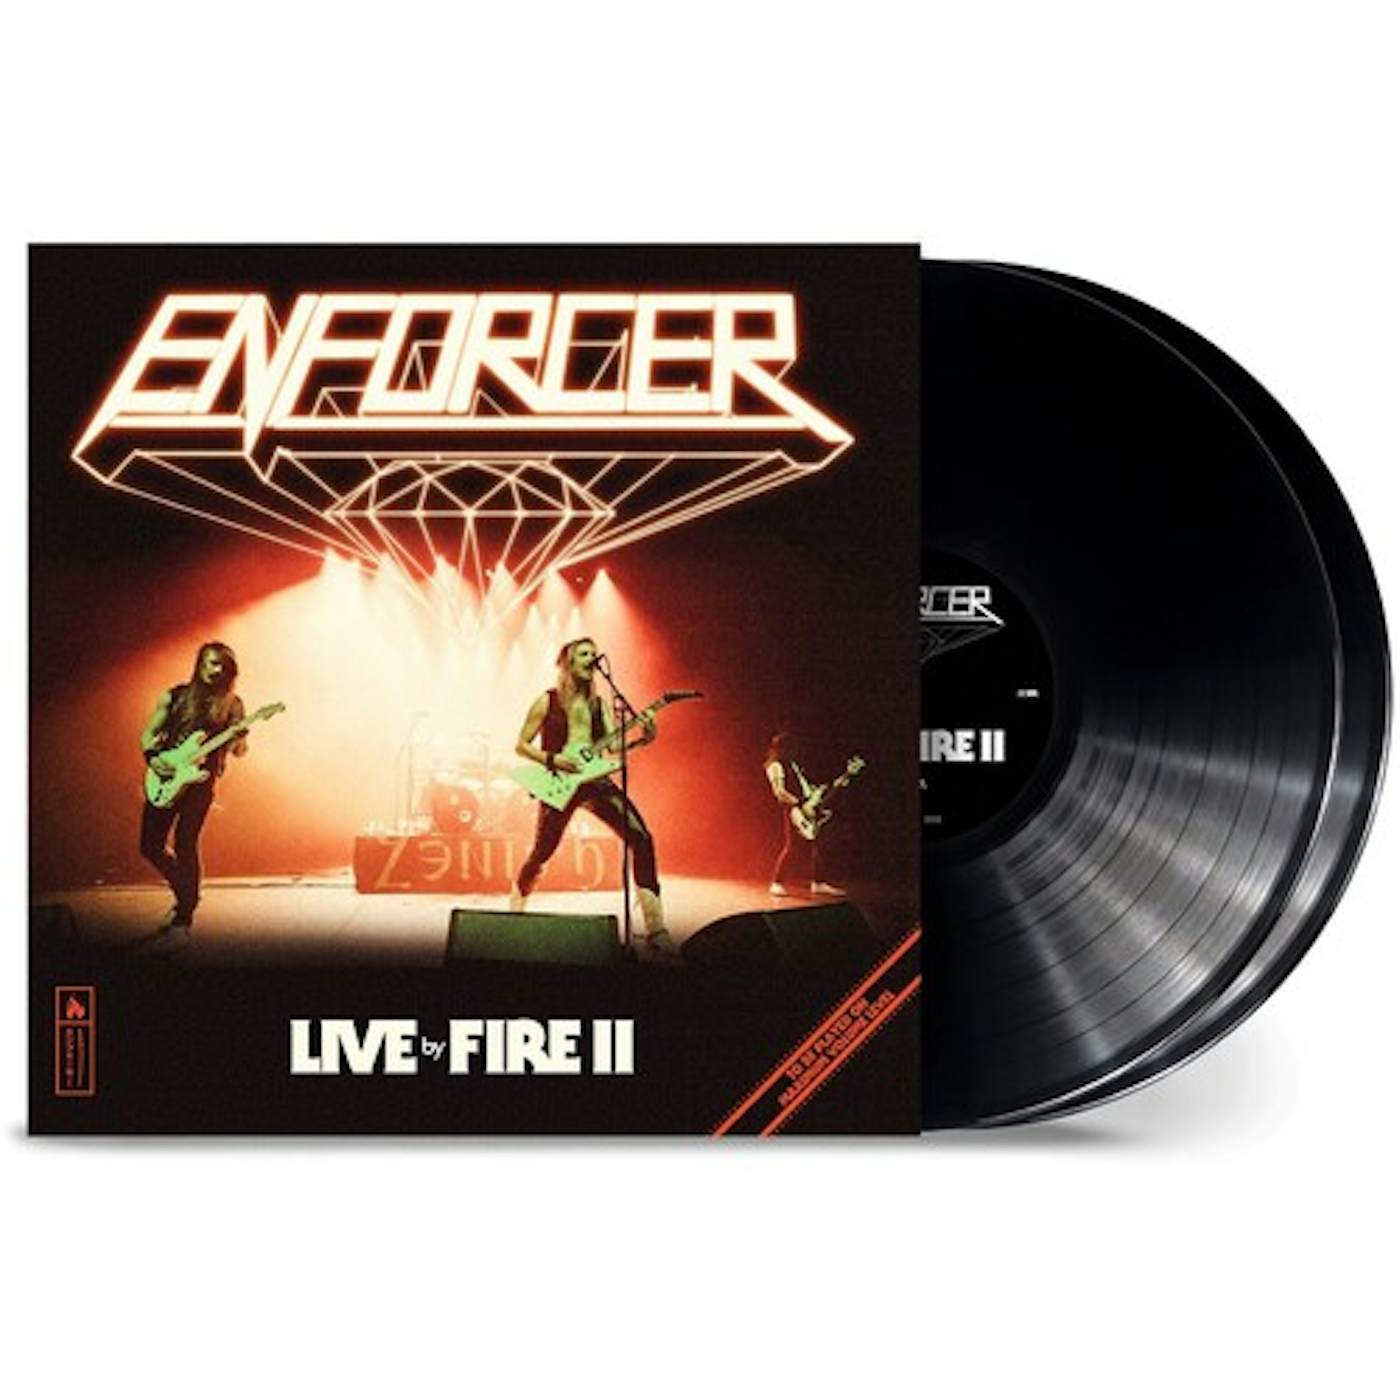 Enforcer Live by Fire II Vinyl Record